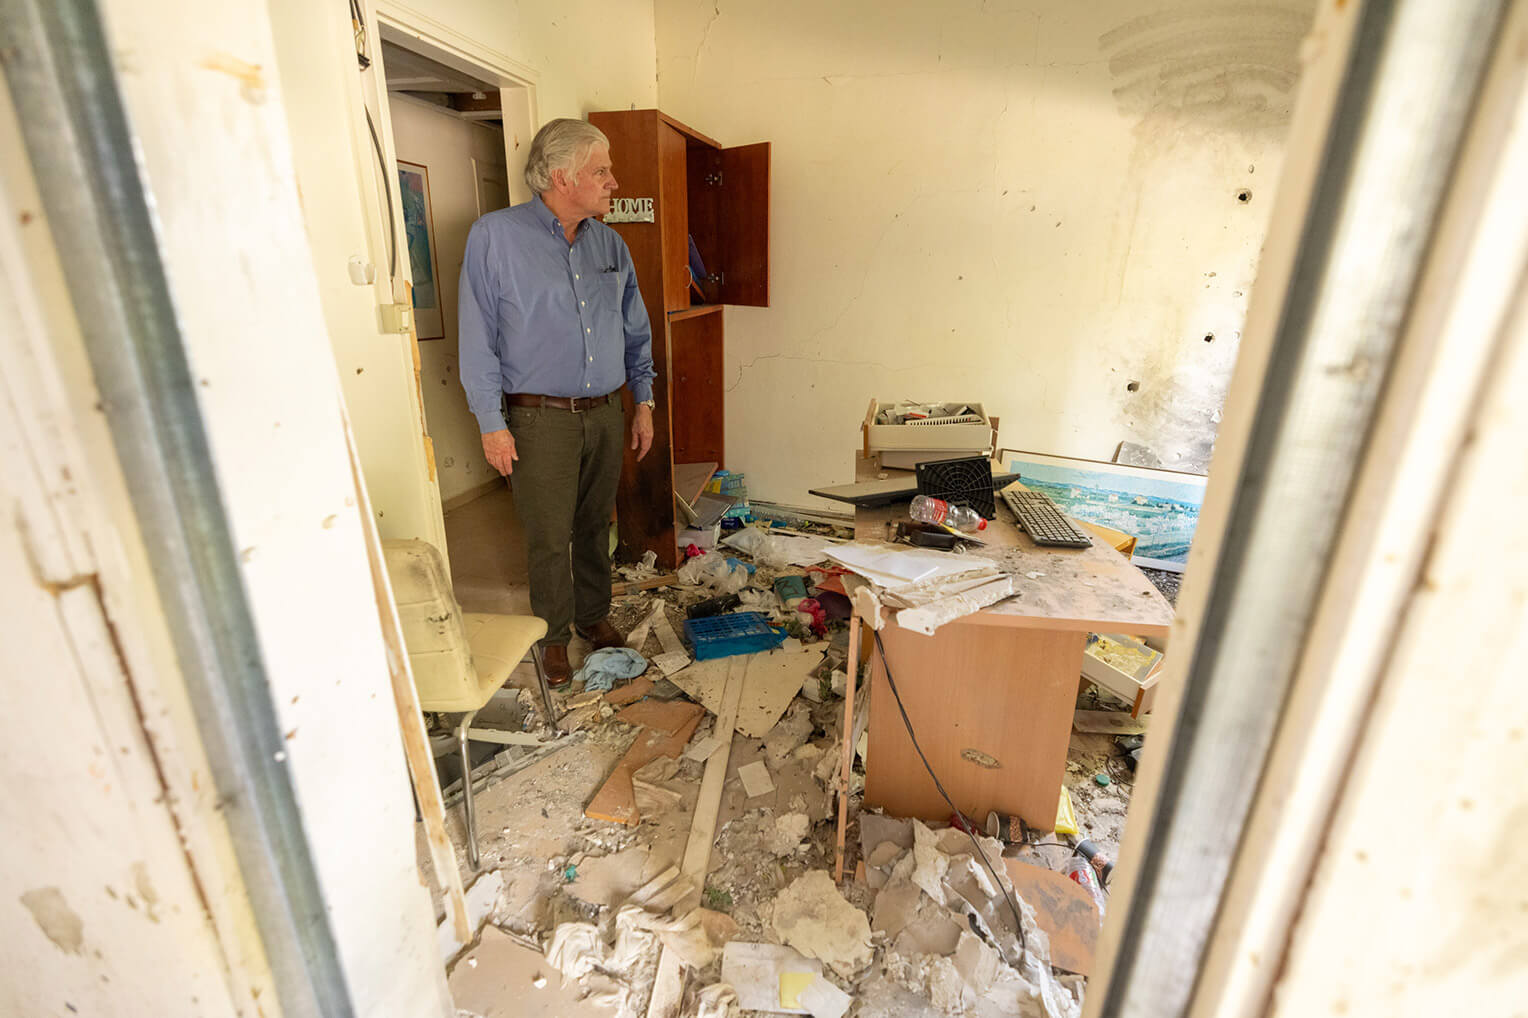 Franklin Graham sees rubble in an Israeli kibbutz attacked by Hamas terrorists.